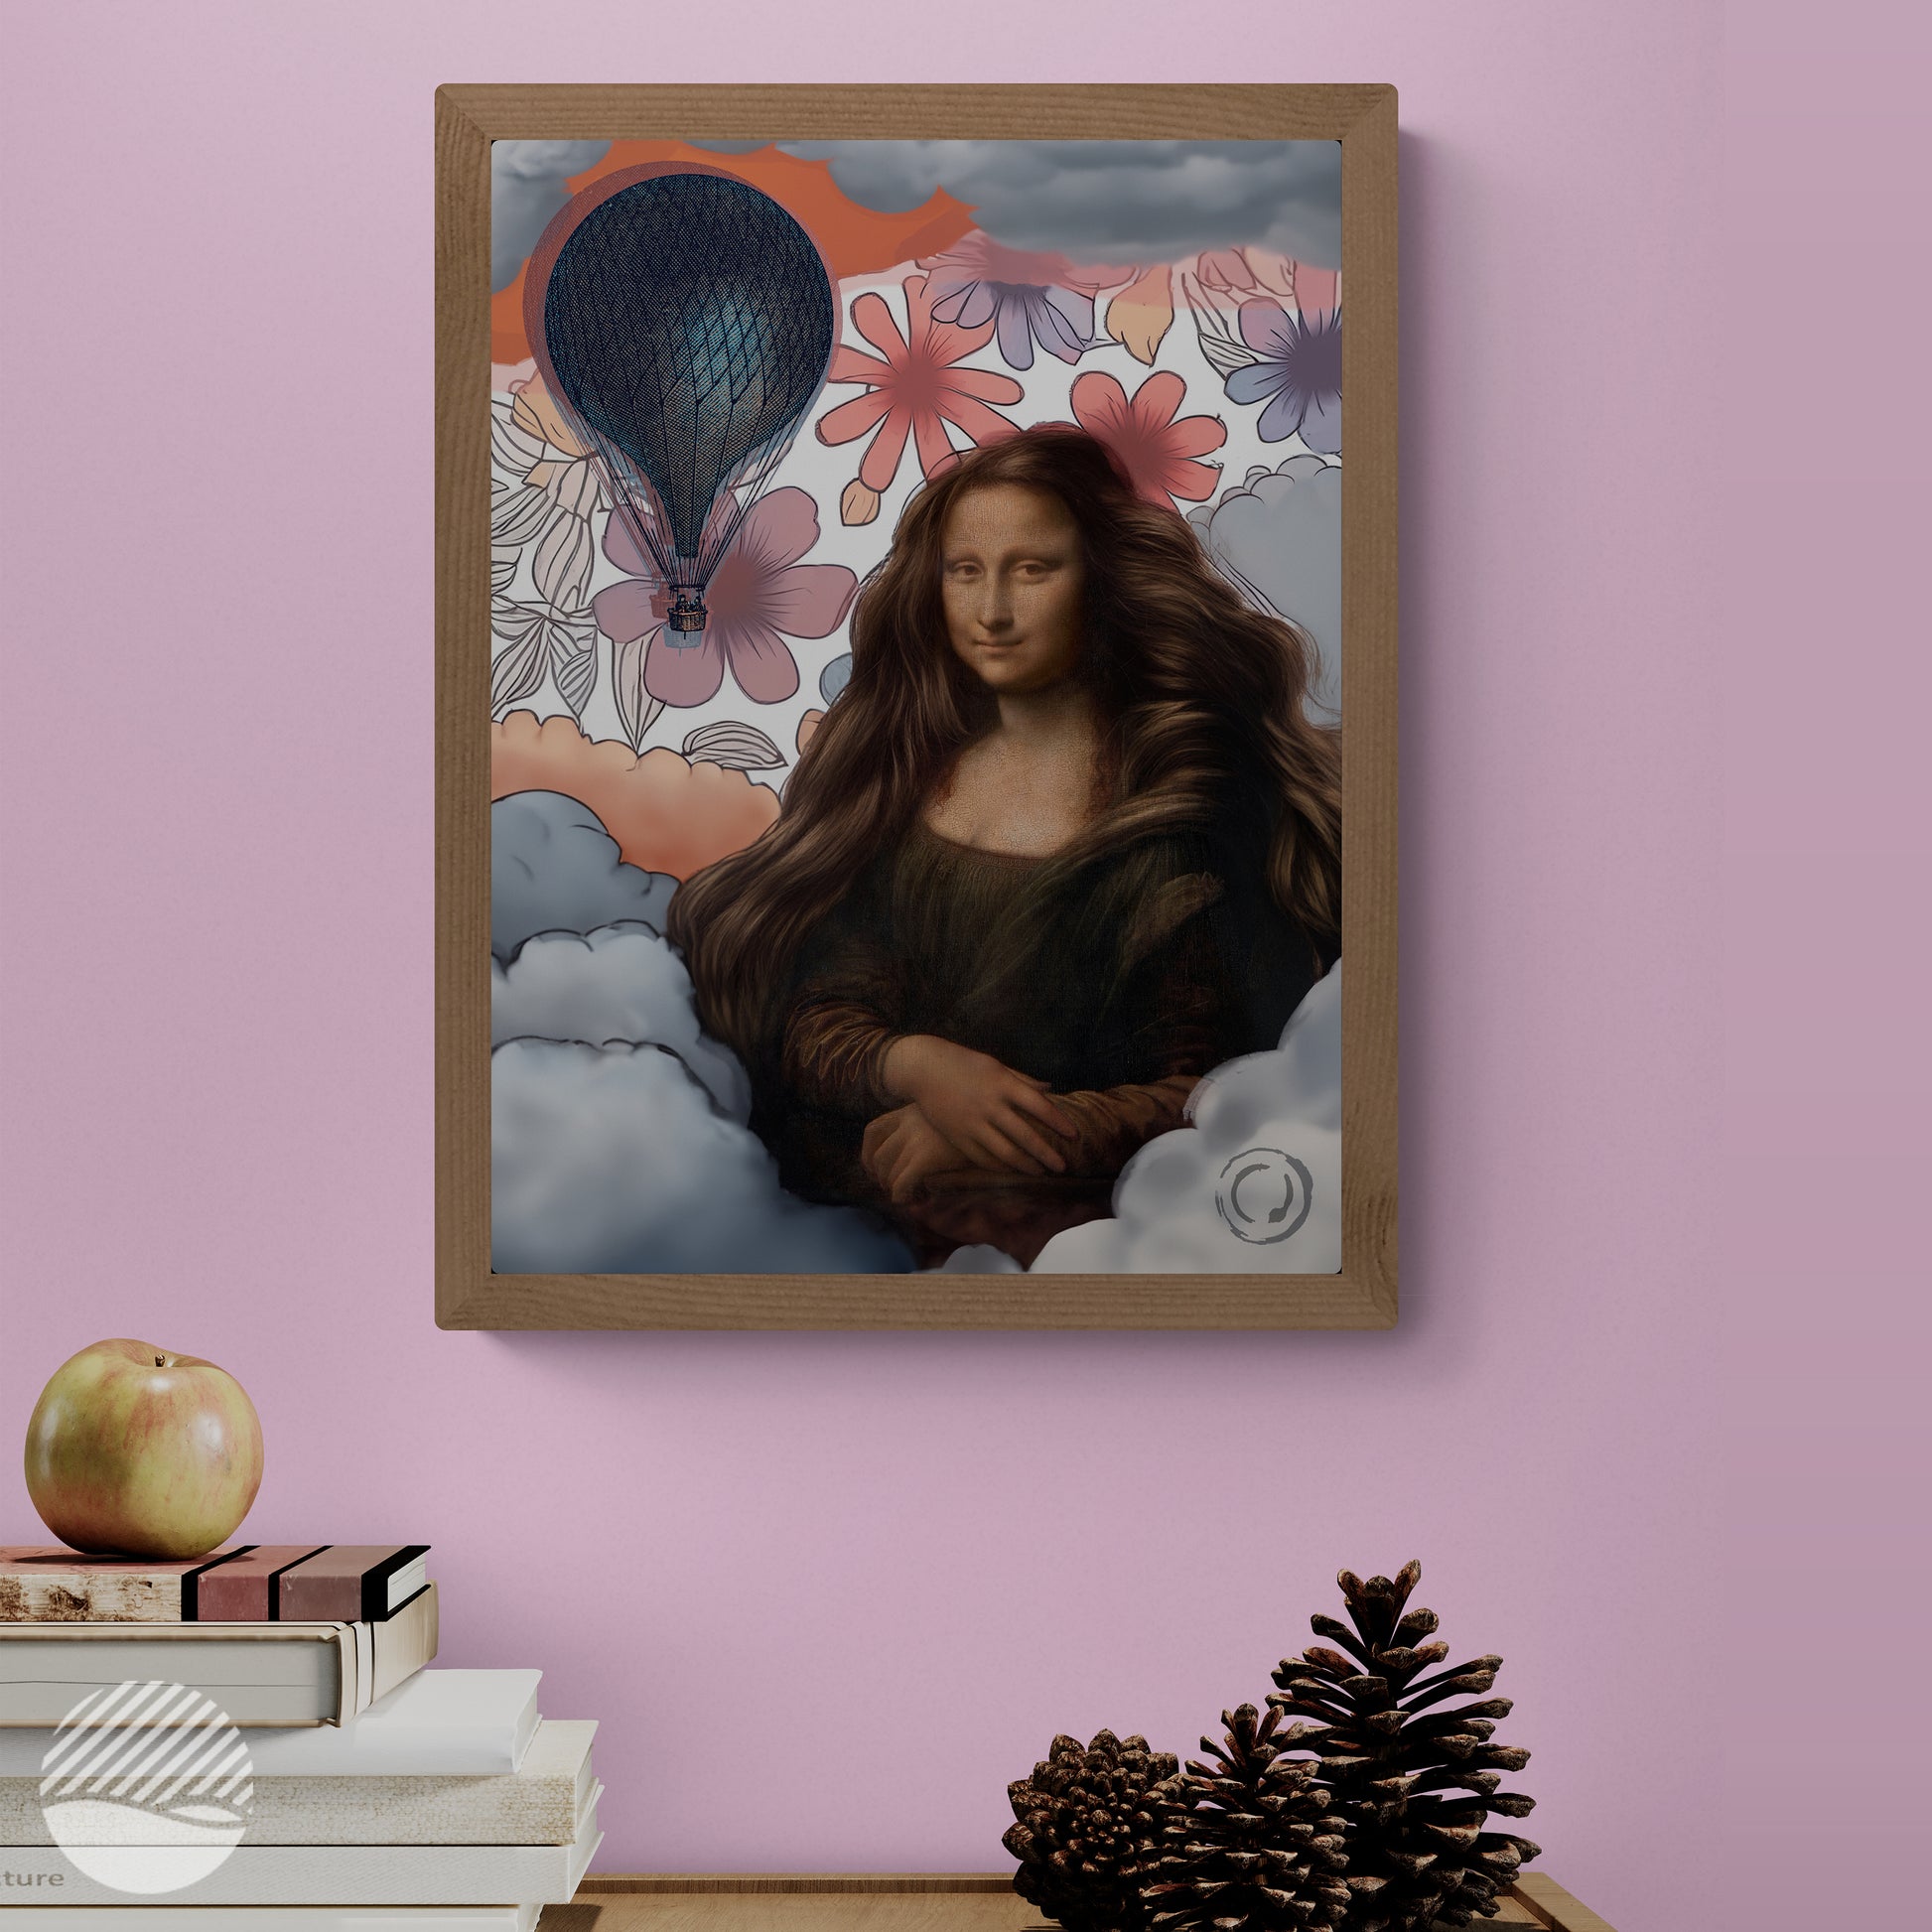 Among the clouds - Monai Lisai art print by Pública Rework mockup Hallway pink